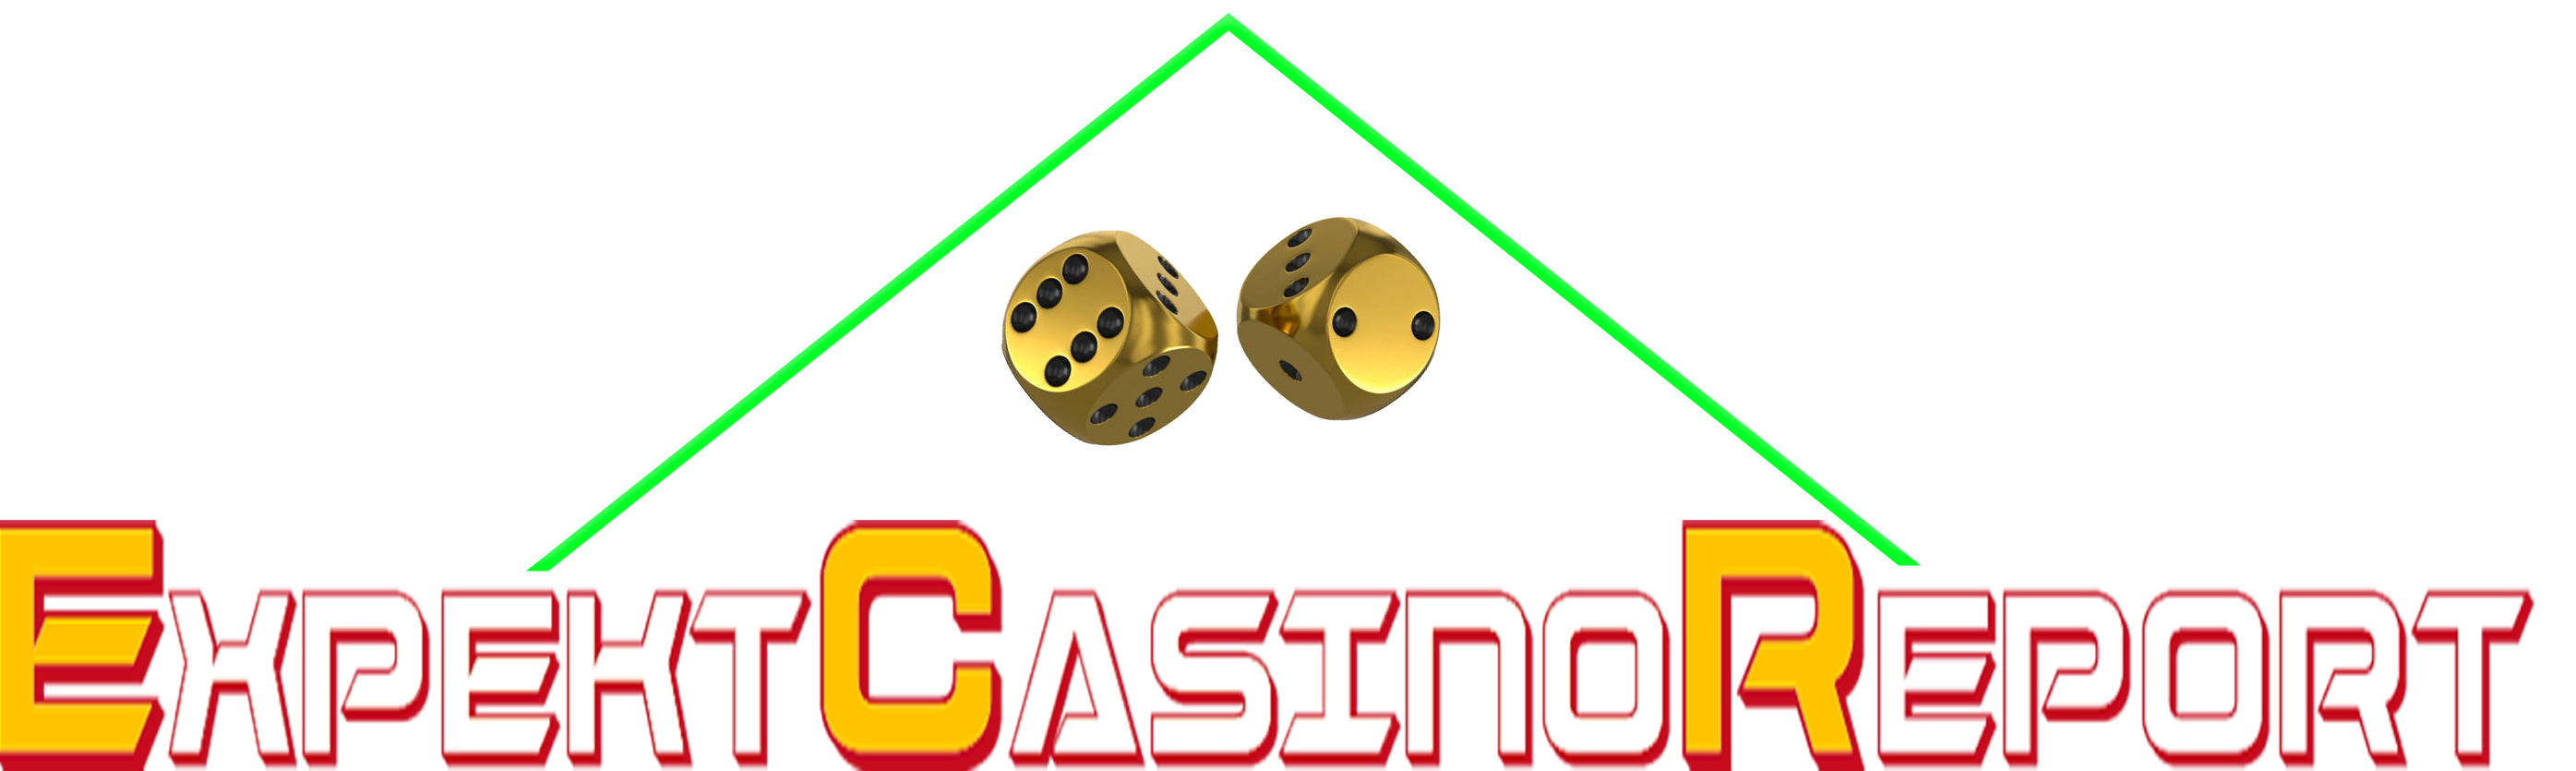 Play Most Popular Online Casinos Games